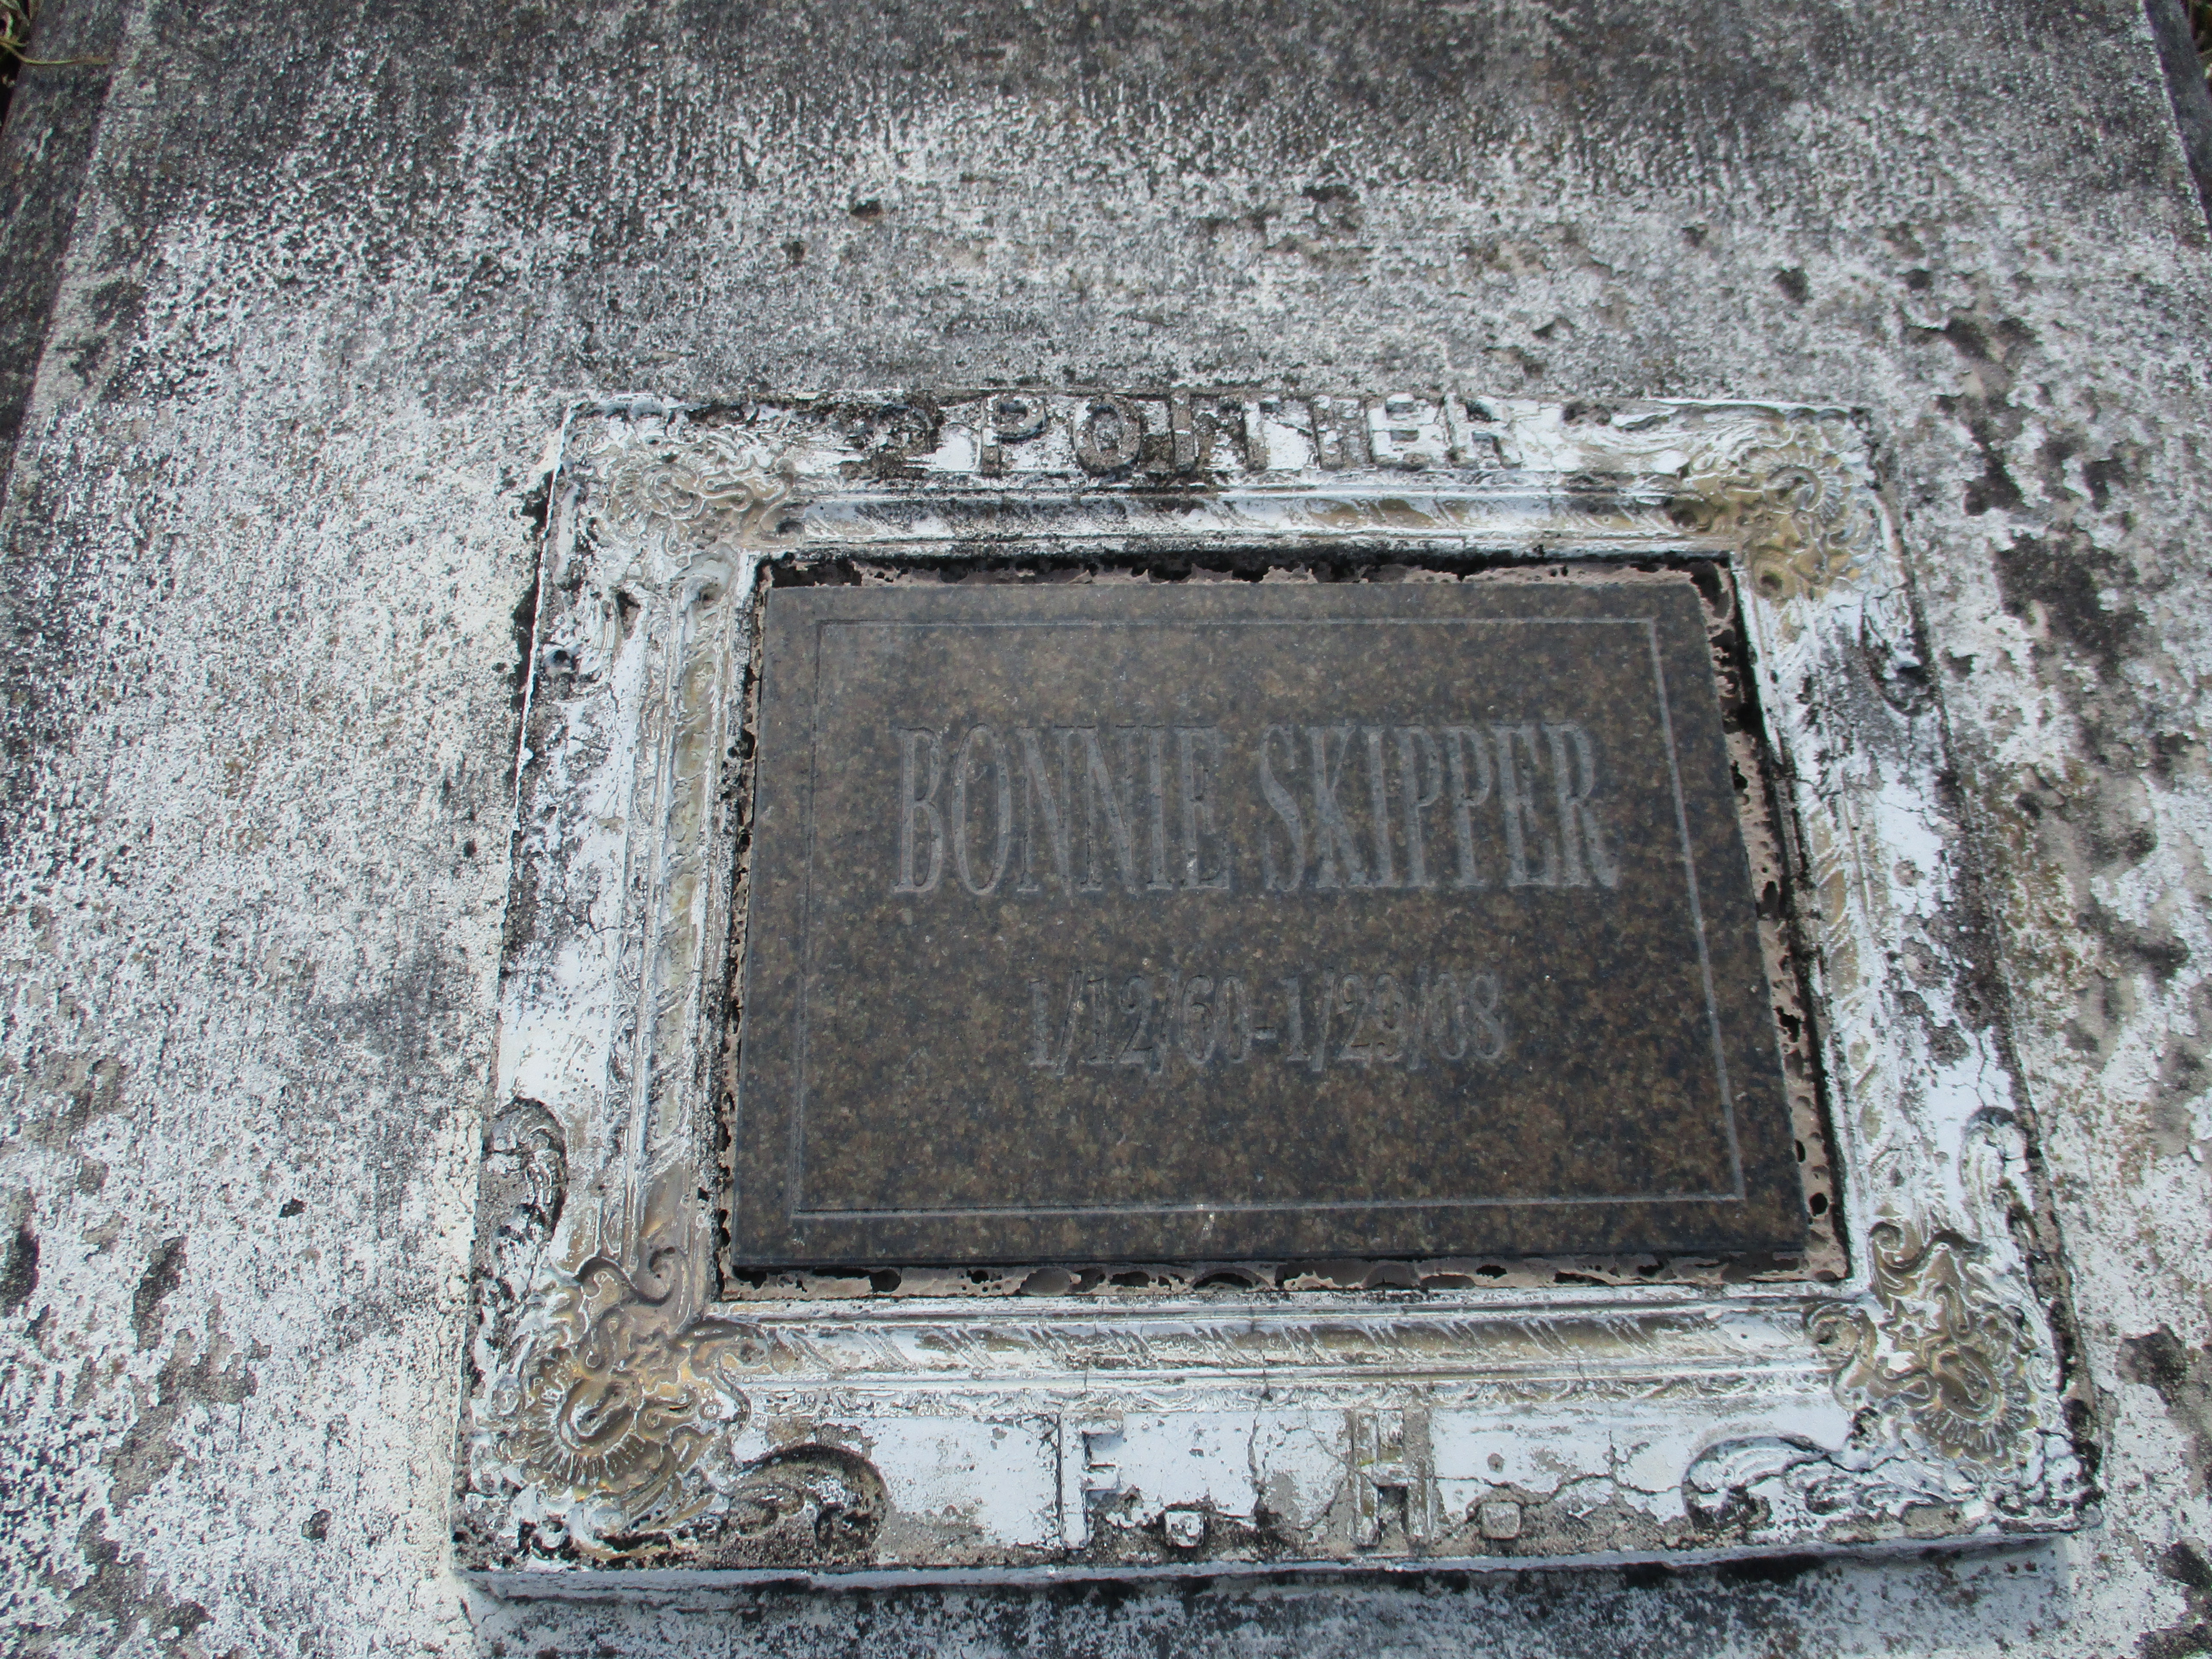 Bonnie Skipper